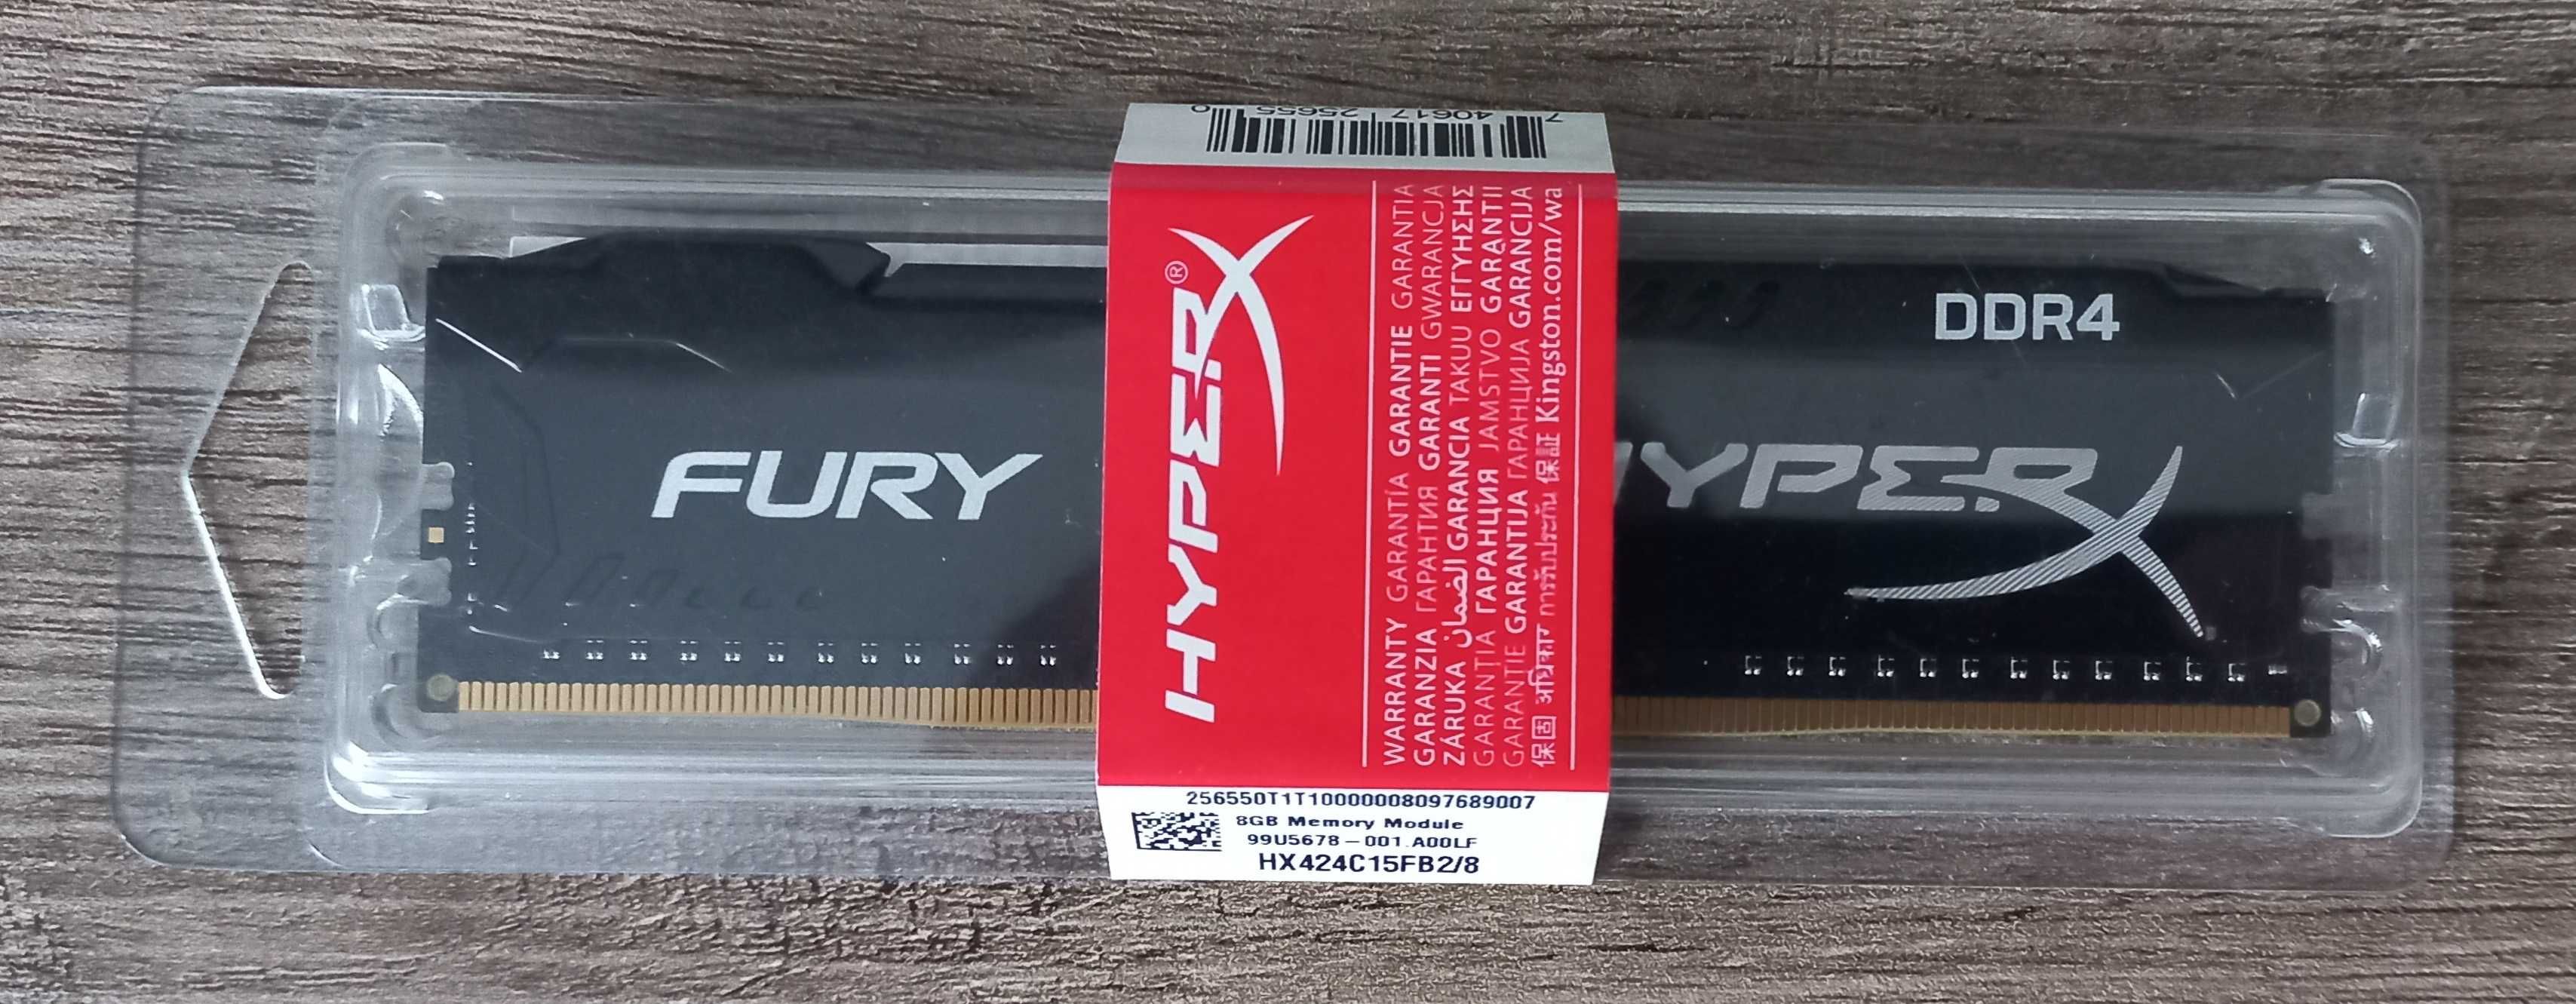 Оперативна пам'ять HyperX DDR4-2400 8 GB (HX424C15FB2/8)